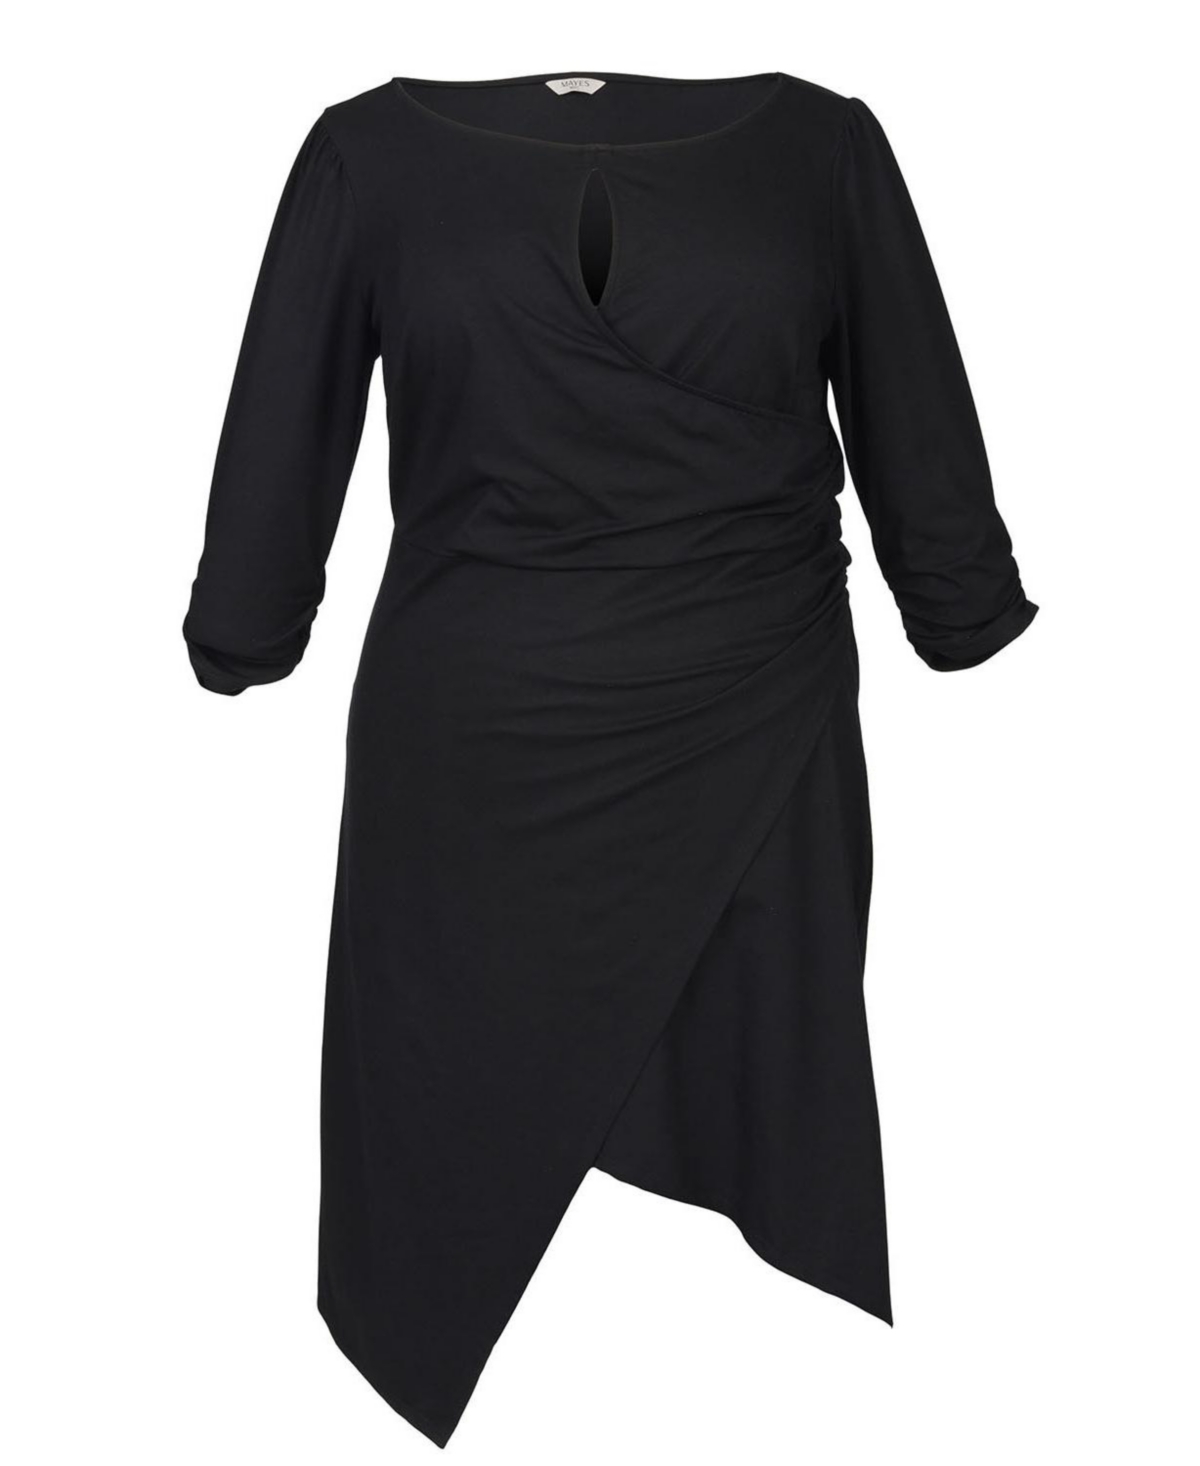 - Women's Plus Size Lina Keyhole Dress - Black